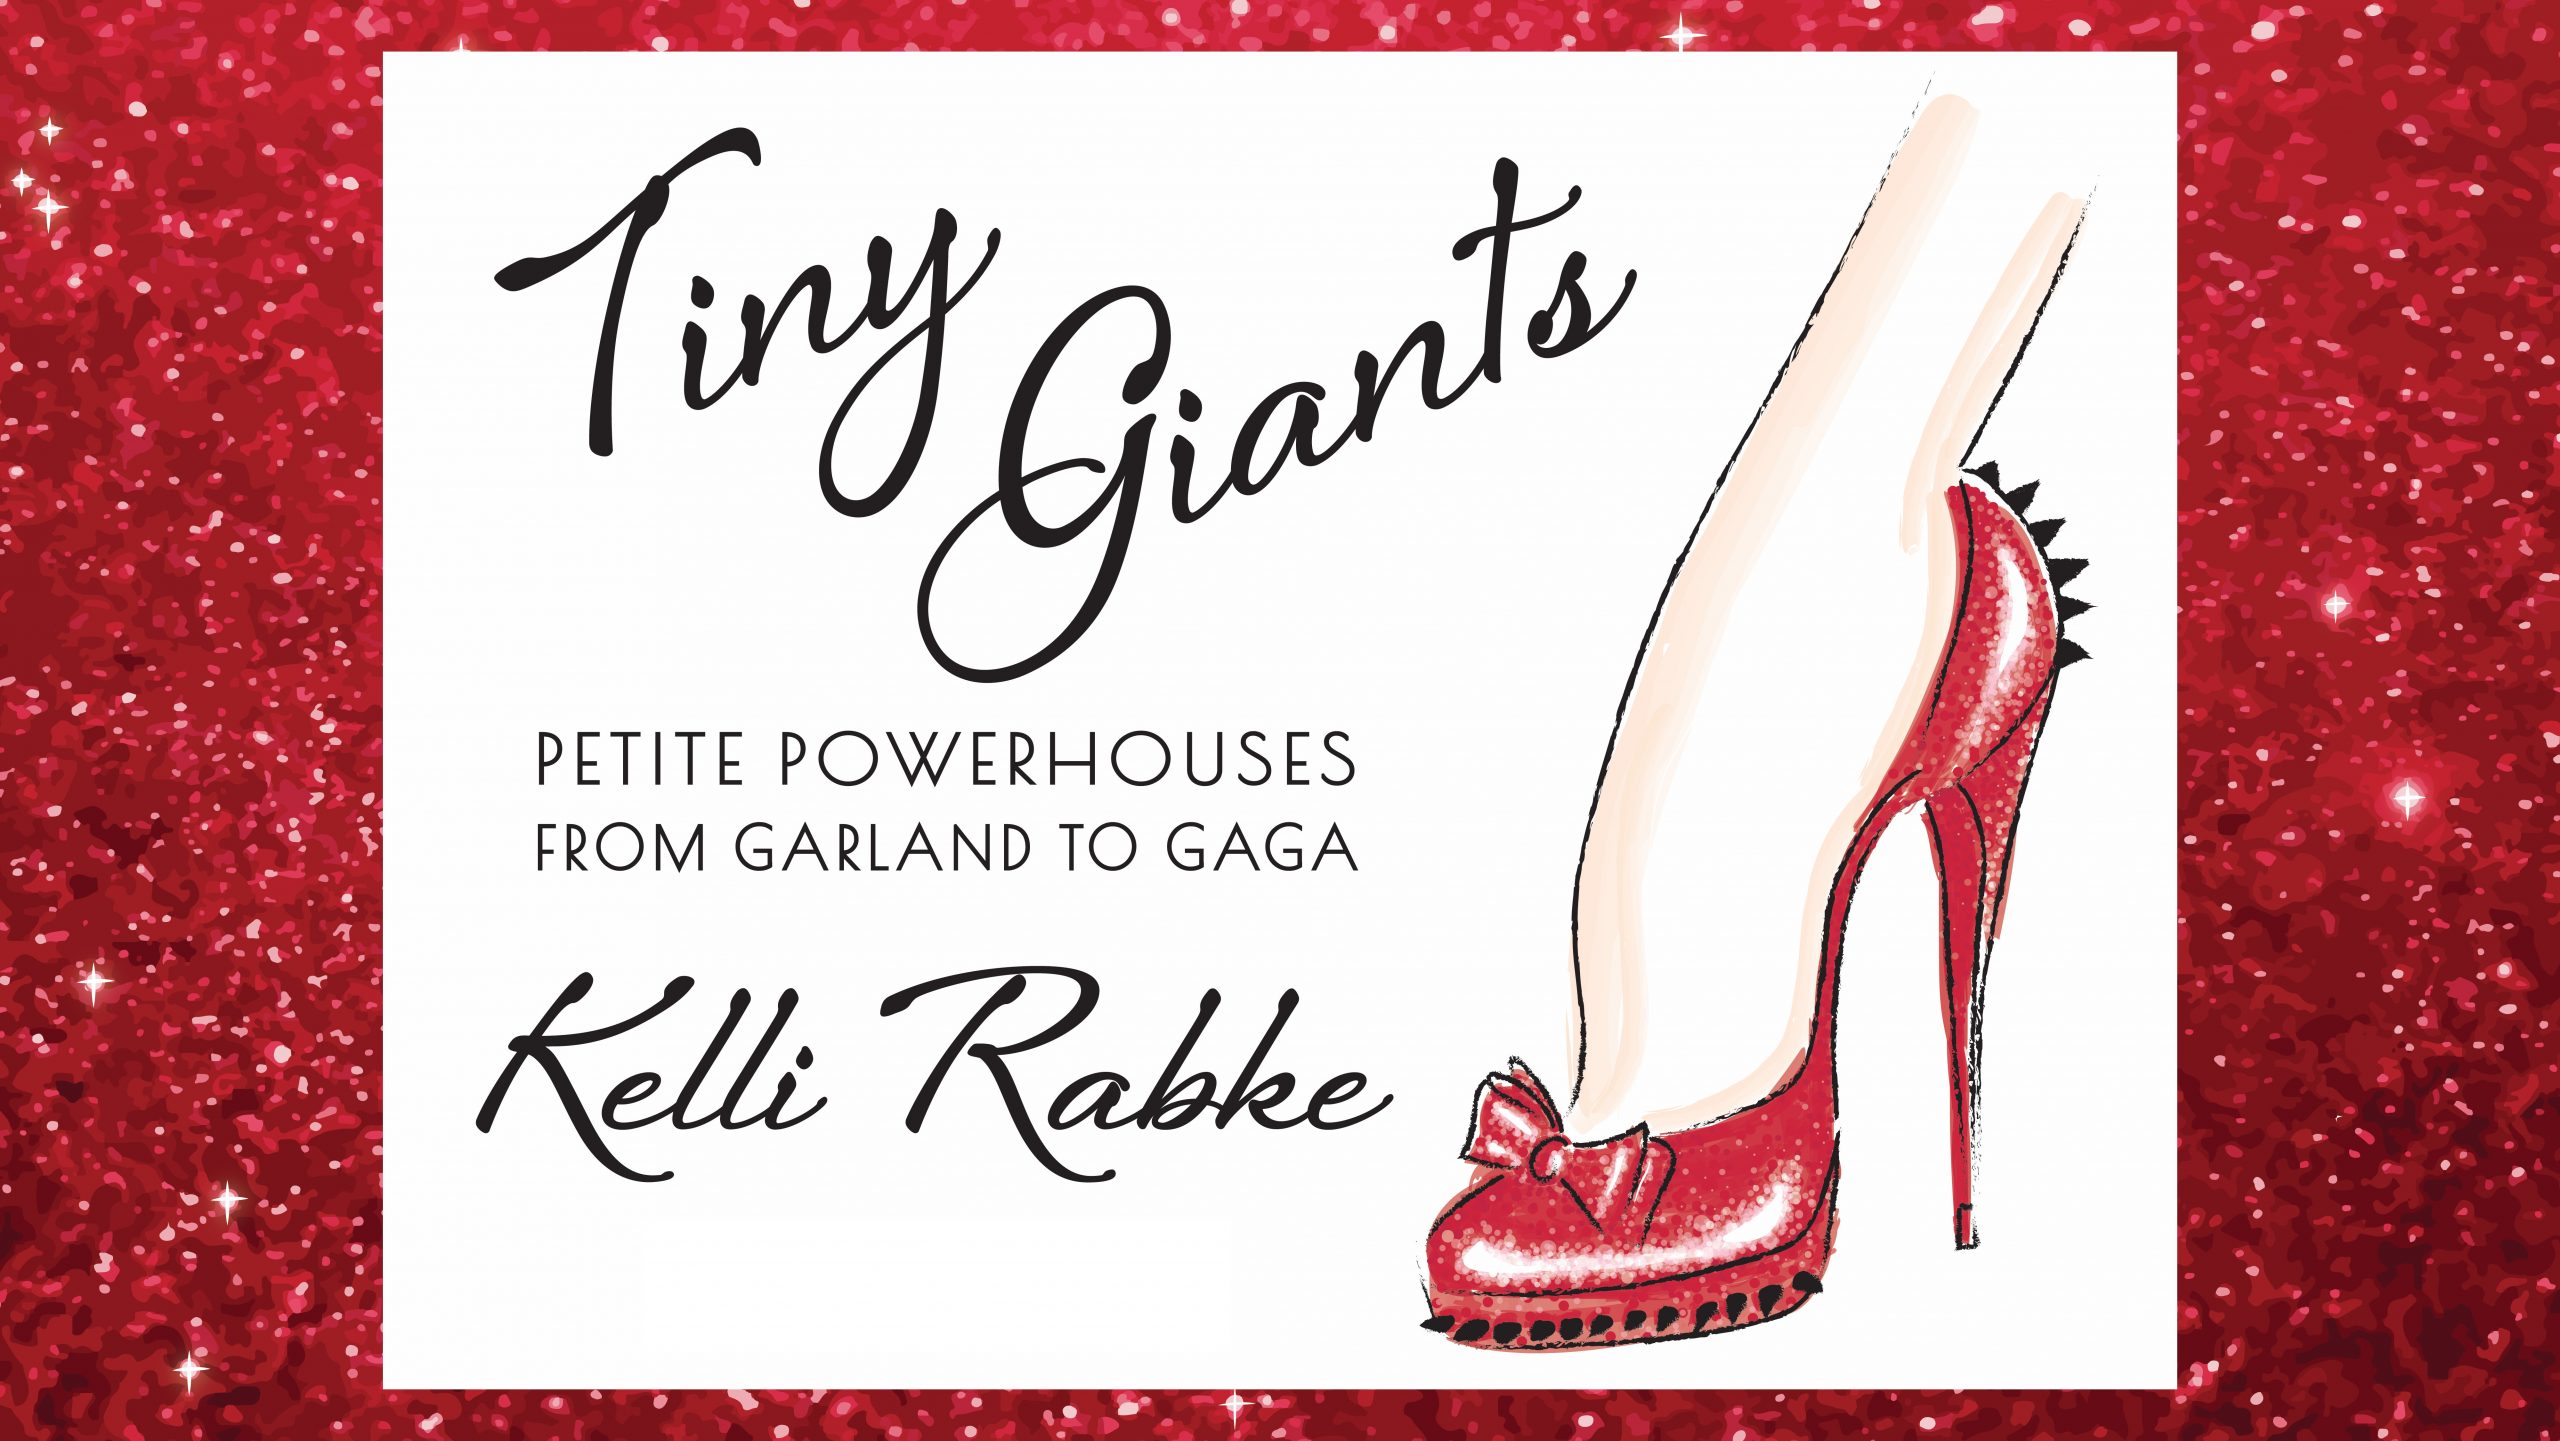 Tiny Giants – Petite Powerhouses from Garland to Gaga Starring Kelli Rabke